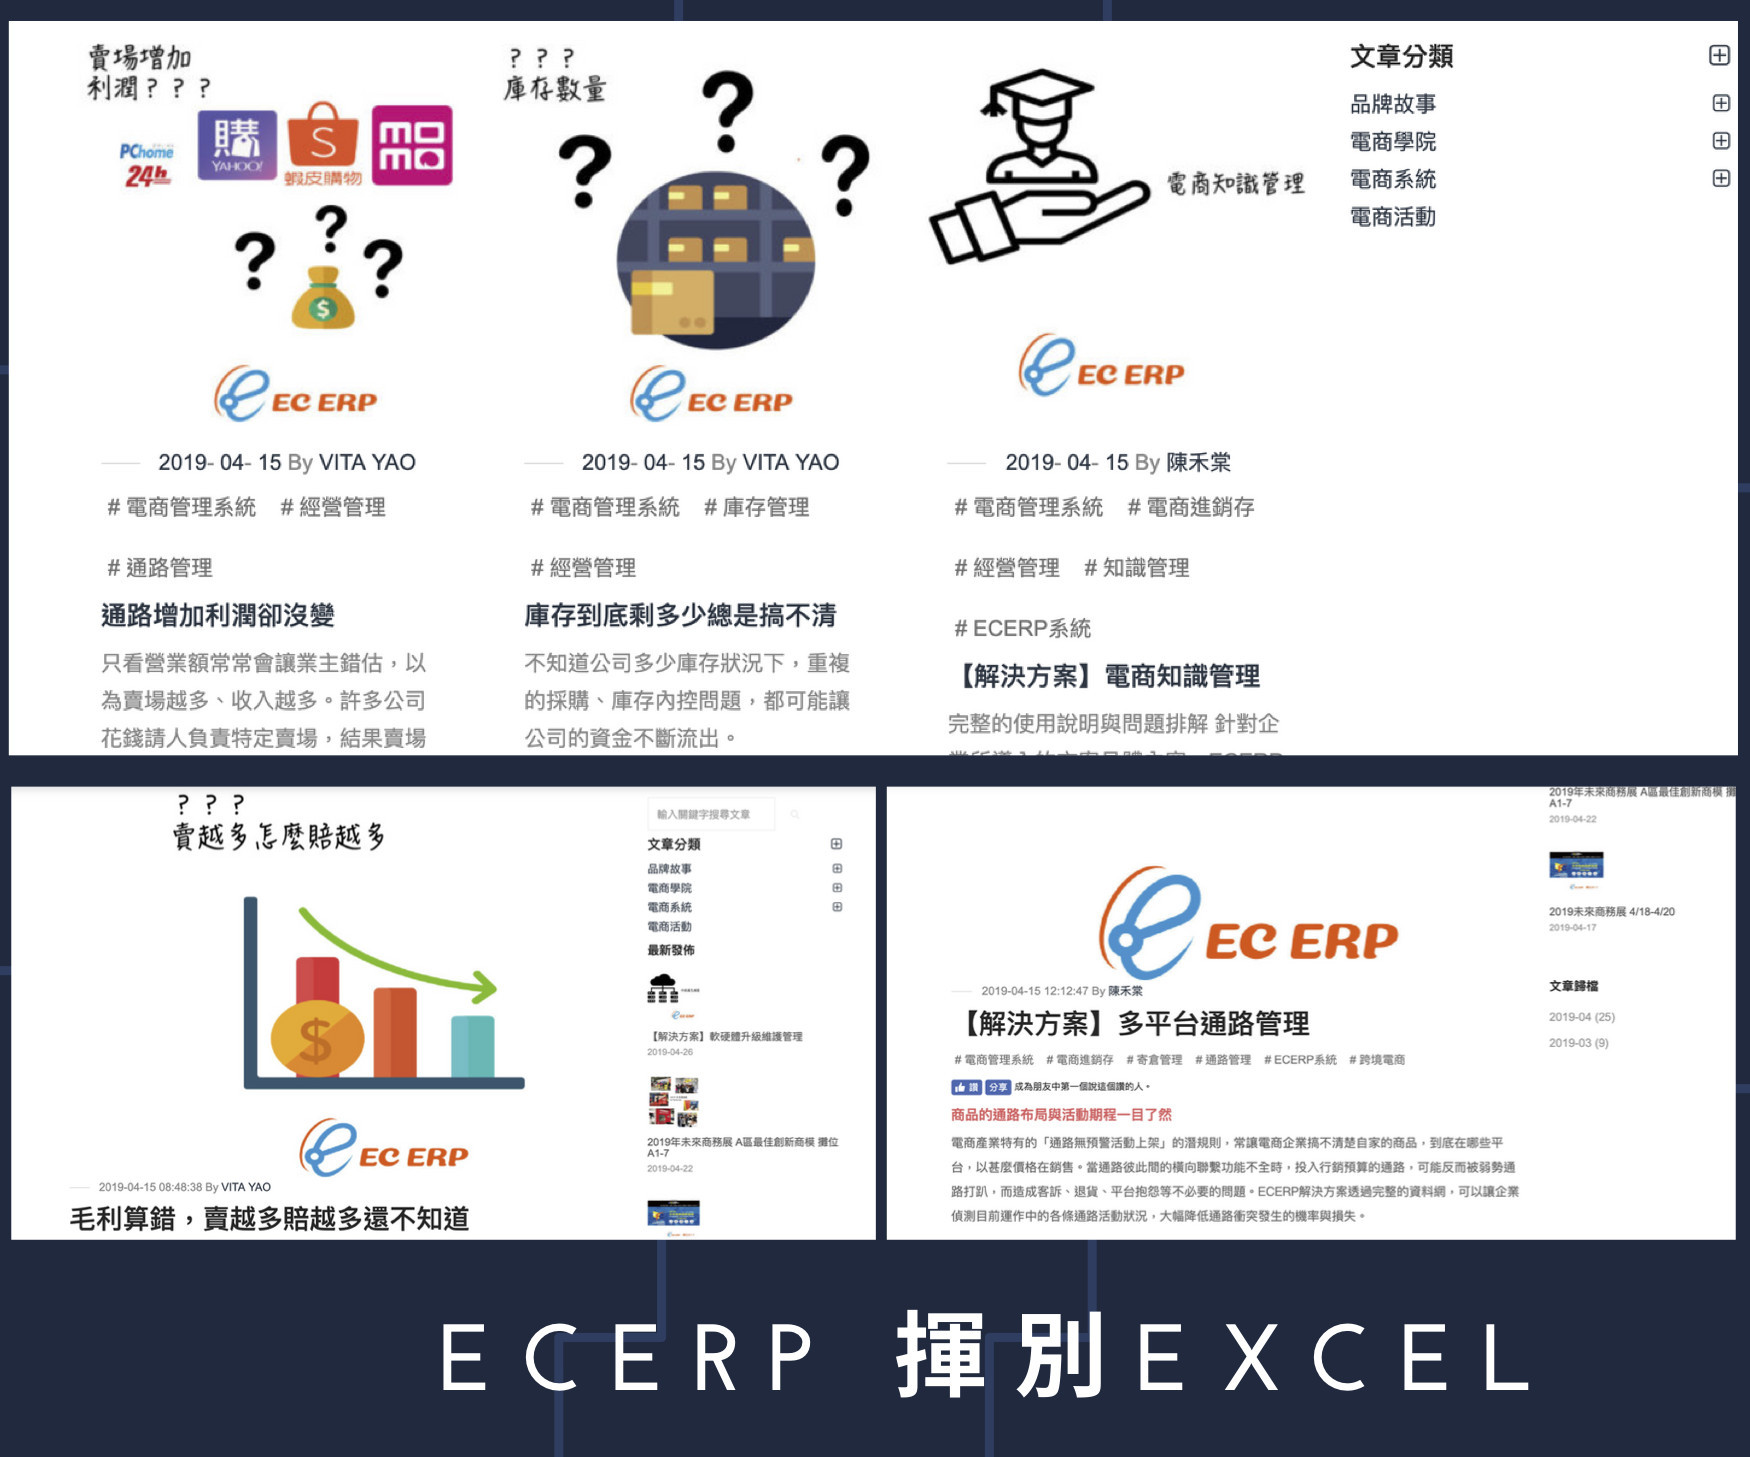 ECERP 揮別Excel，悠立得電商管理系統 電商學院